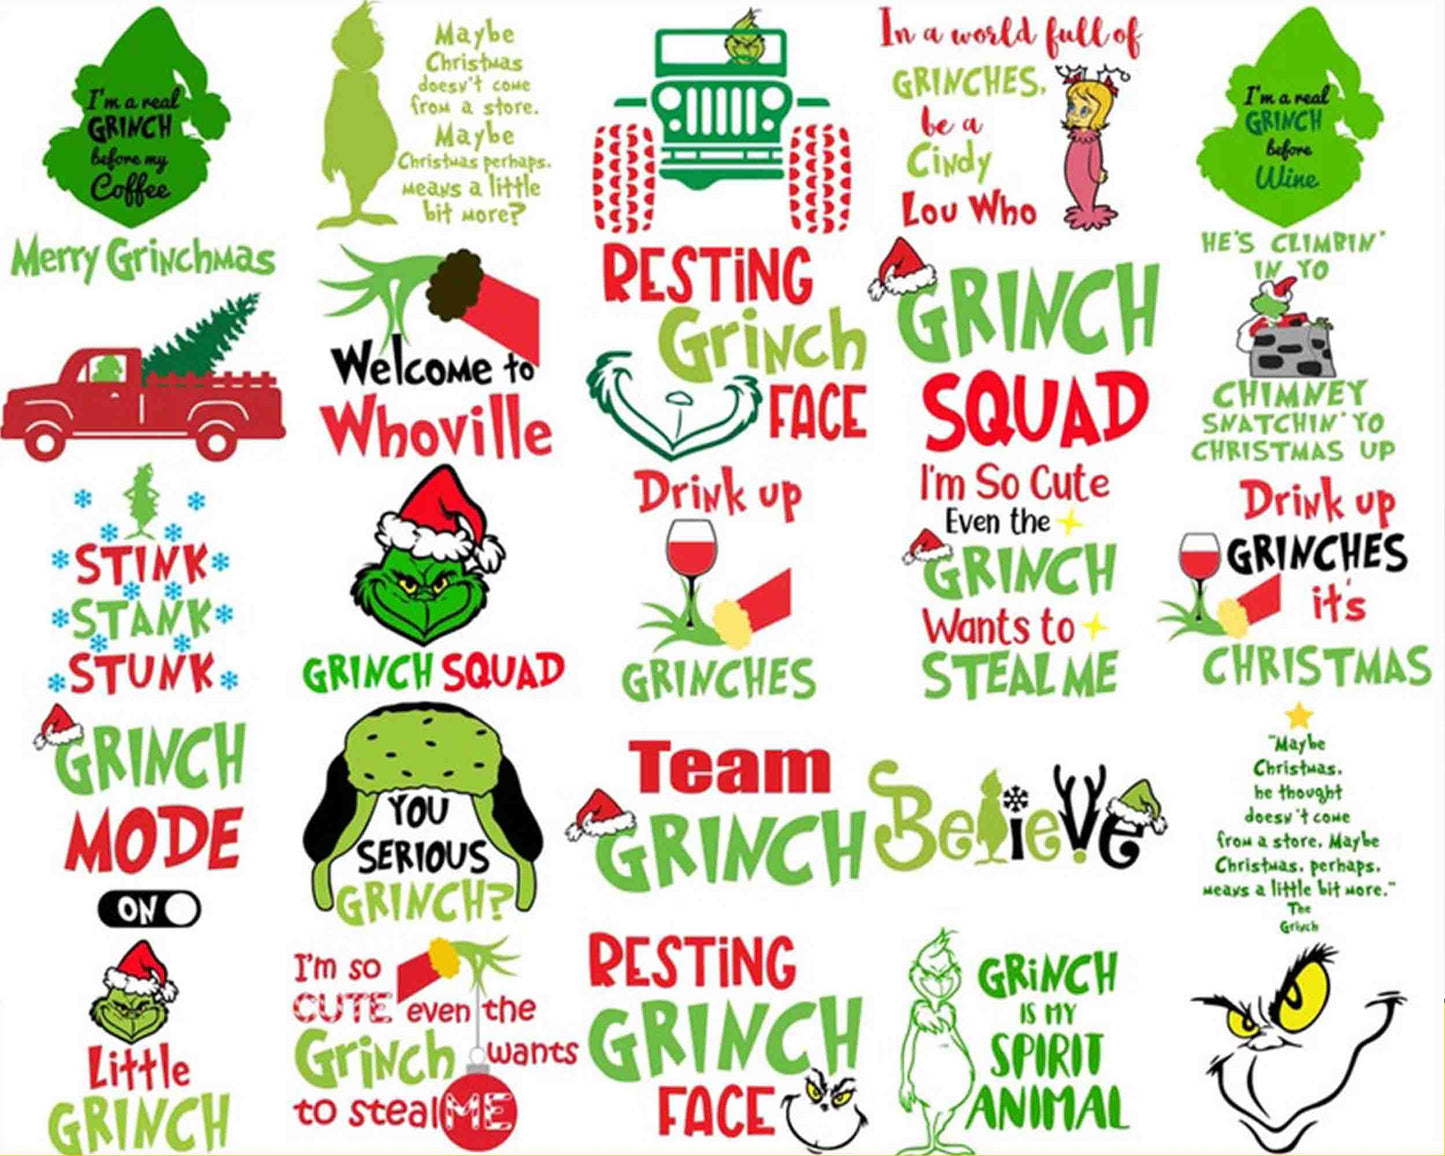 950+ file Grinch Bundle SVG, Grinch SVG, Grinch Cutting Image, Christmas Grinch svg , for Cricut, Silhouette, digital, file cut